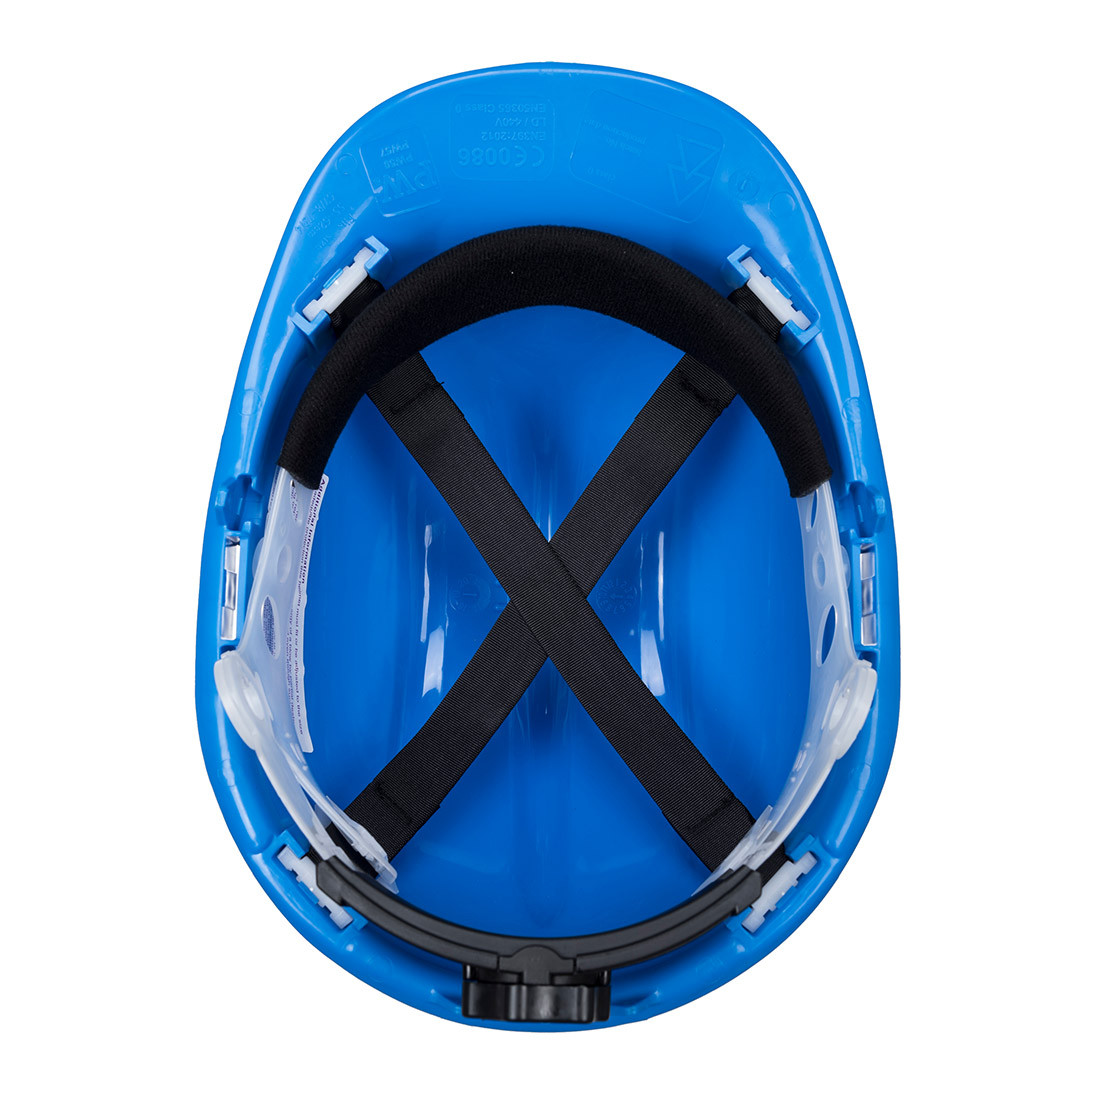 Casca Protectie Expertbase Wheel - Echipamente de protectie personala